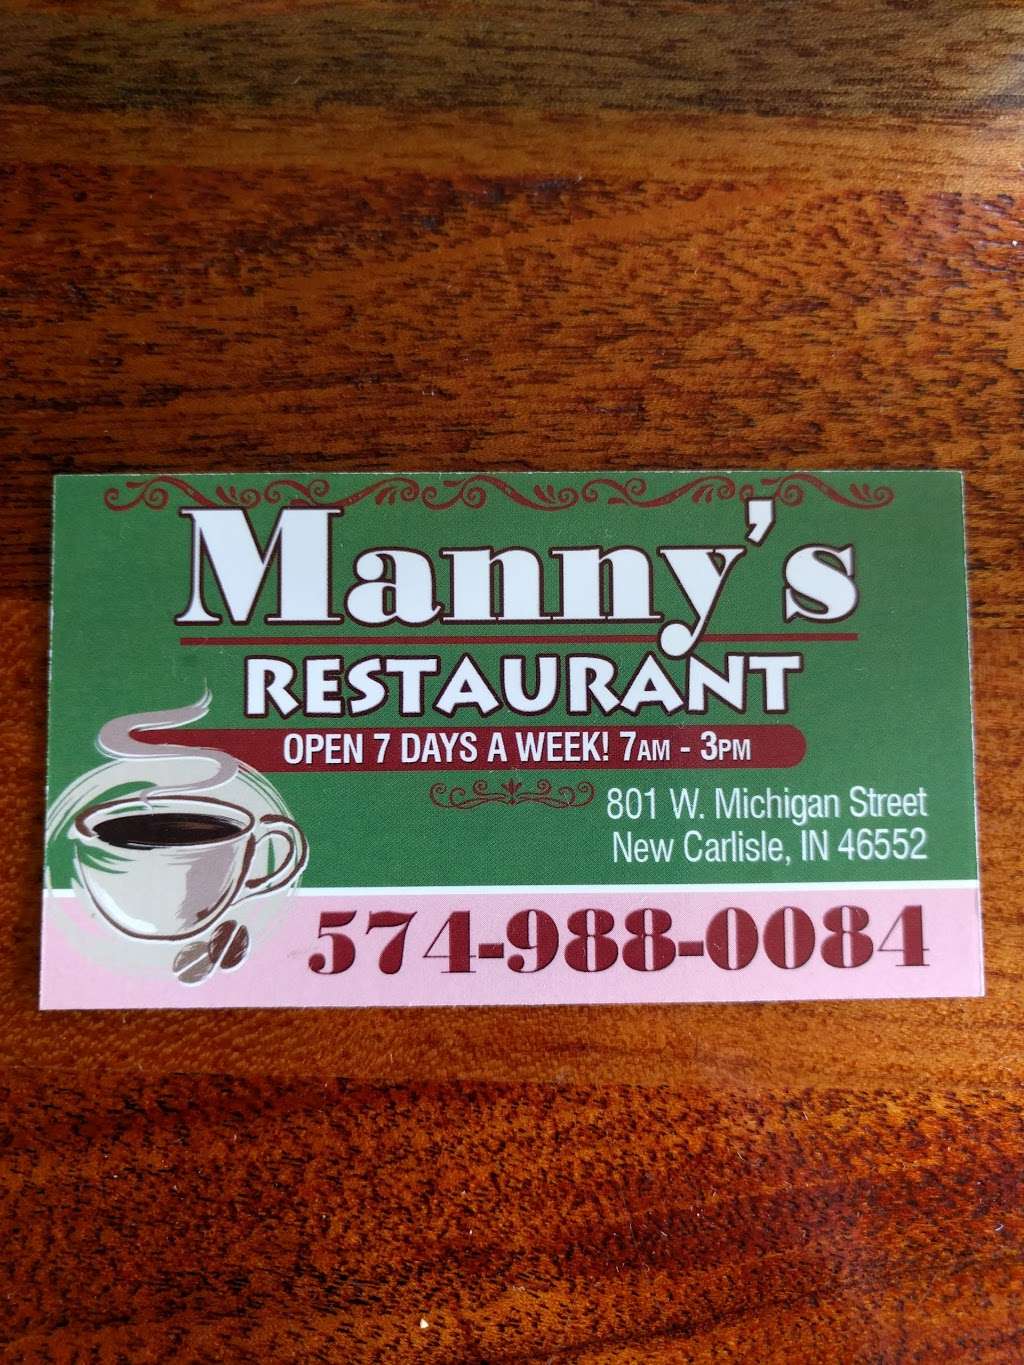 Mannys Restaurant | 801 W Michigan St, New Carlisle, IN 46552 | Phone: (574) 988-0084